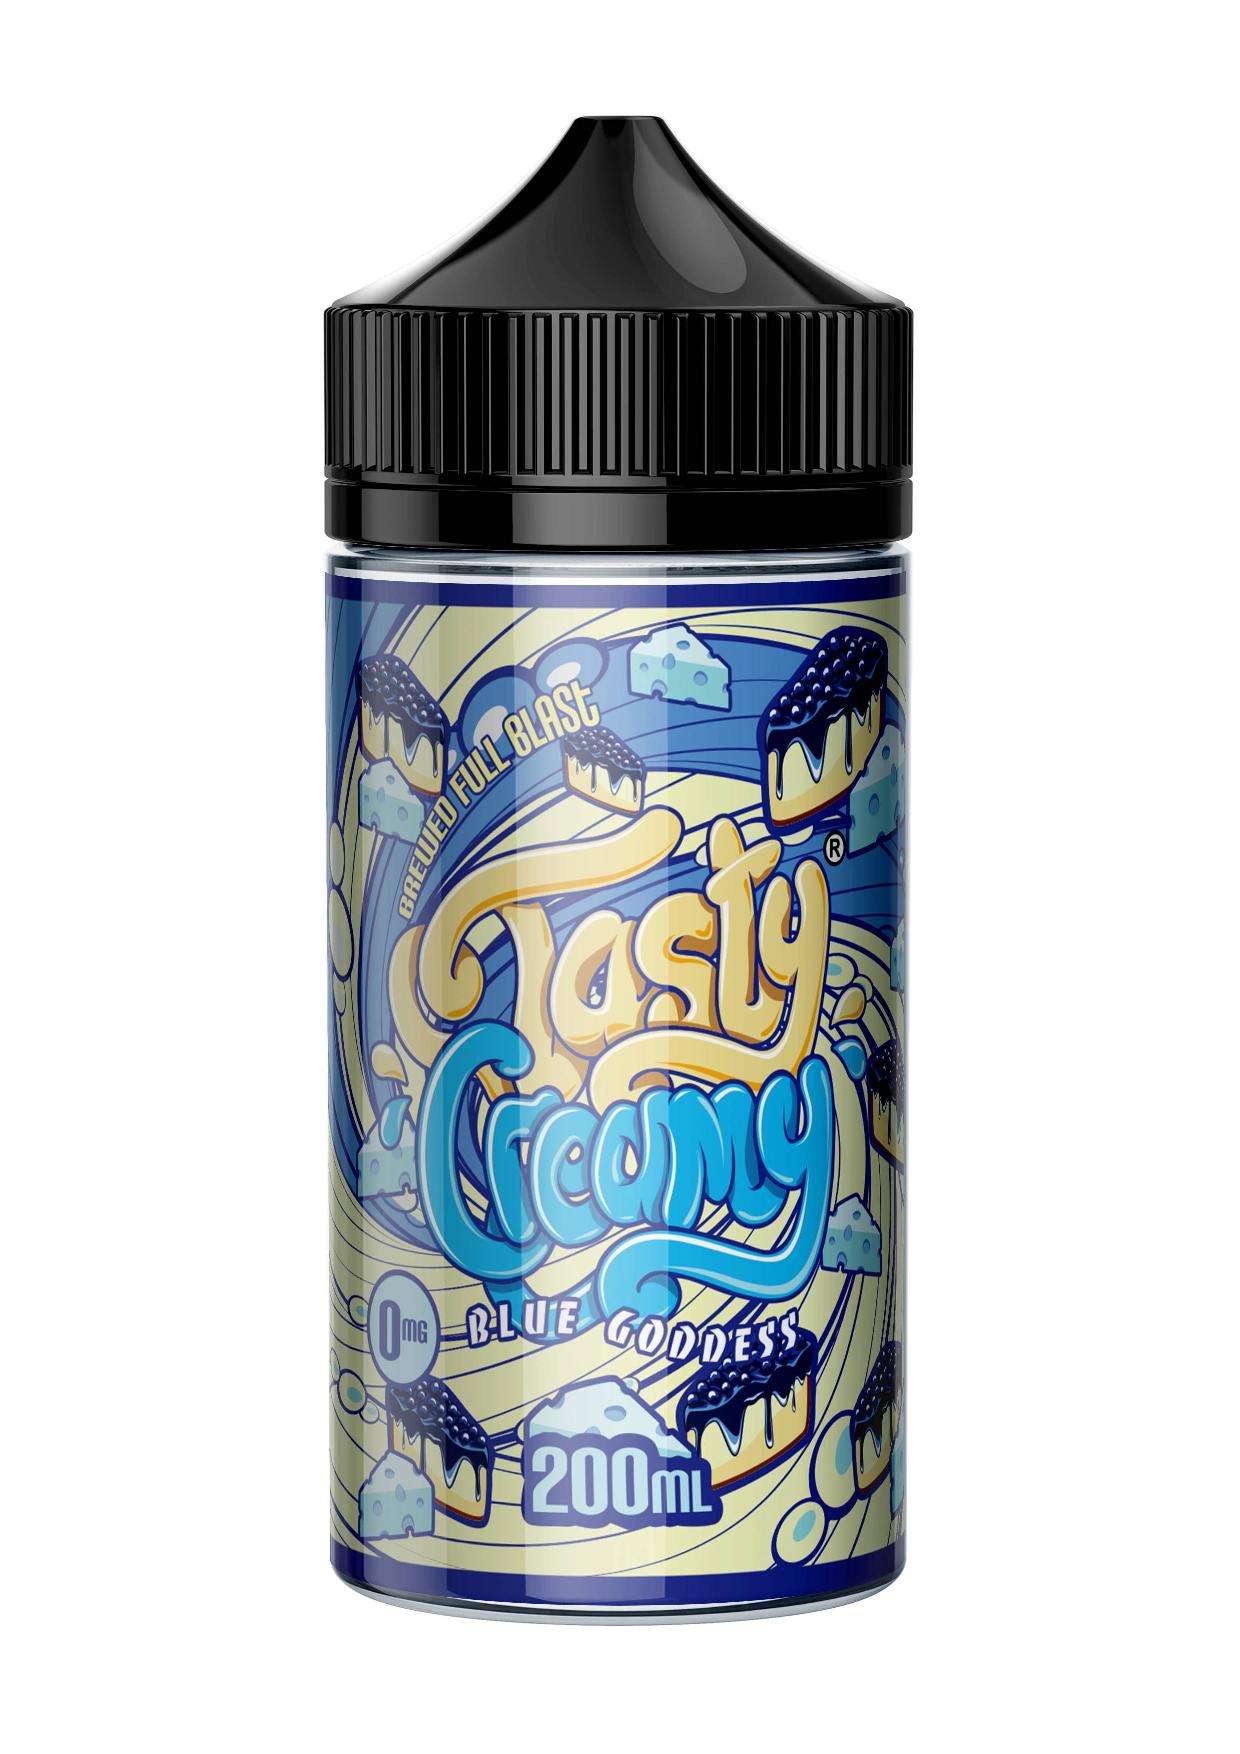 Tasty Creamy - Blue Goddess - 200ml